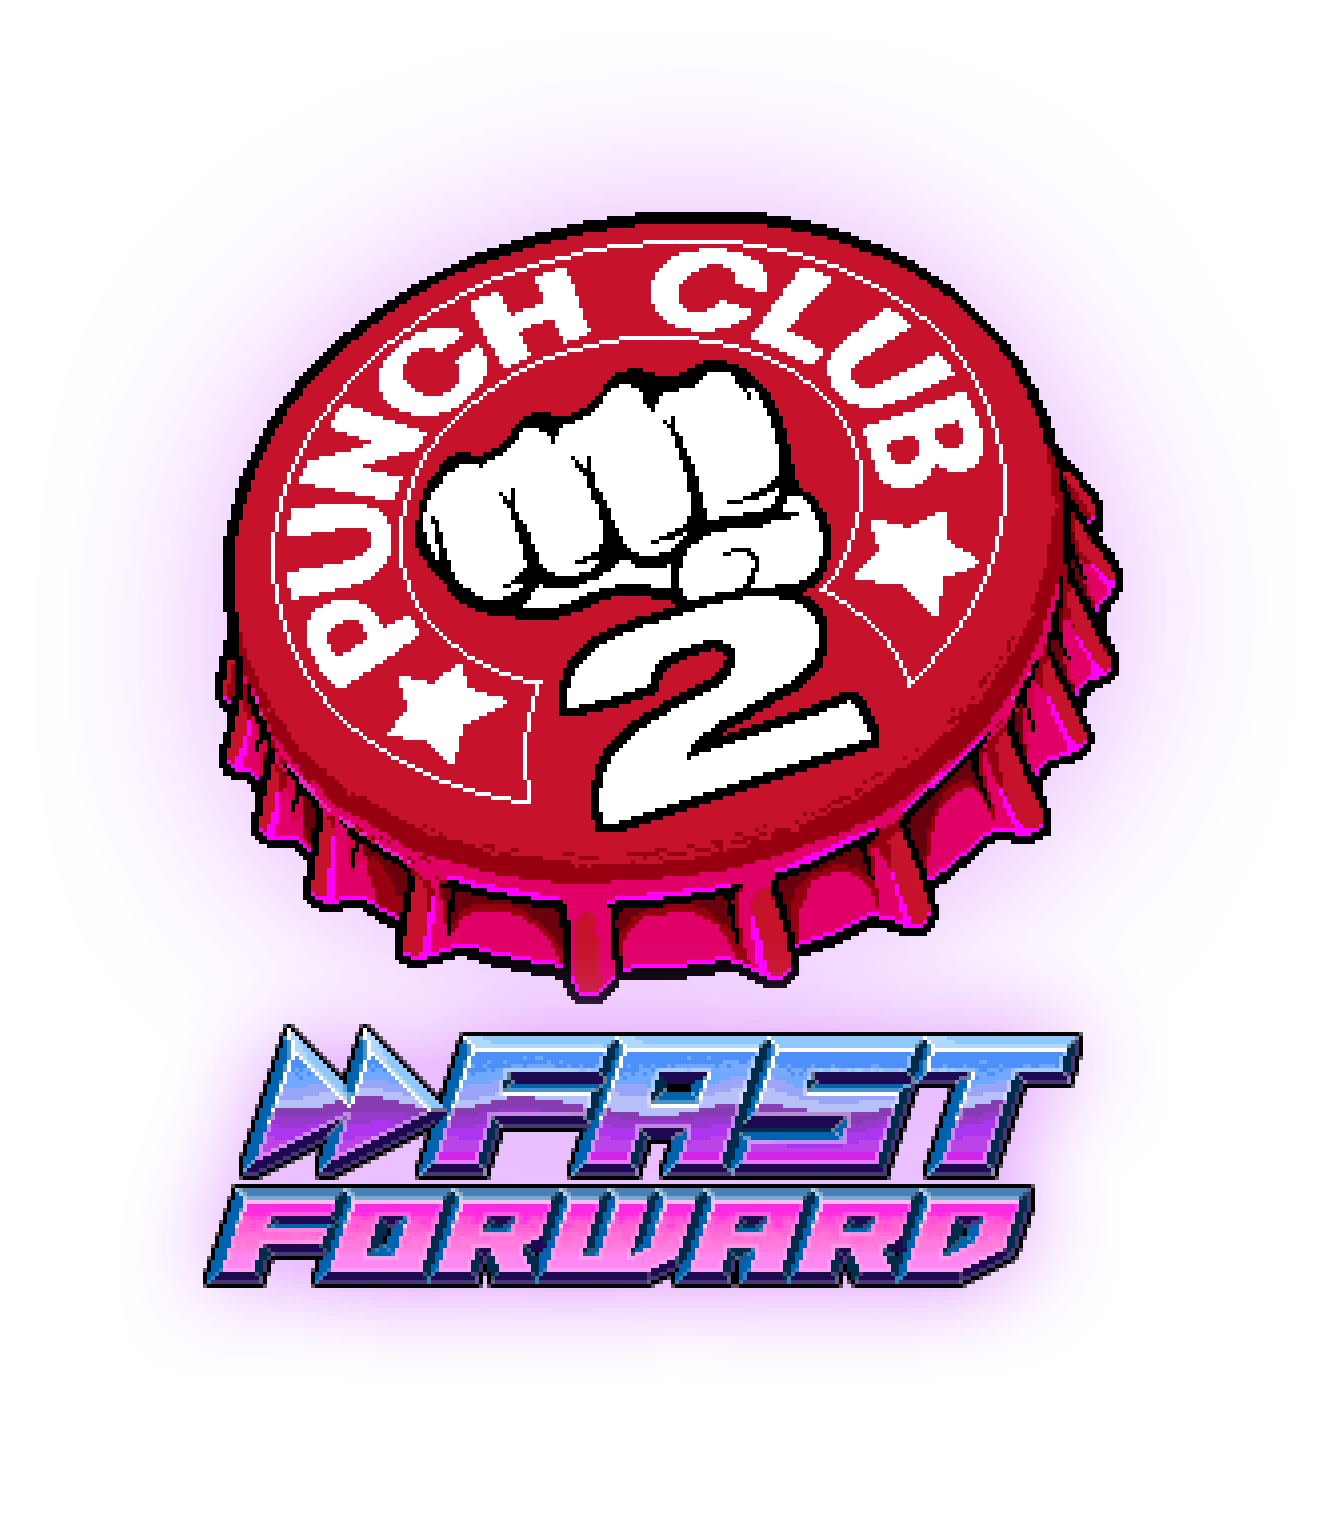 Club 2 fast forward. Панч клаб. Punch Club 2: fast forward. Punch Club fast forward. Punch Club 2 fast forward на андроид.